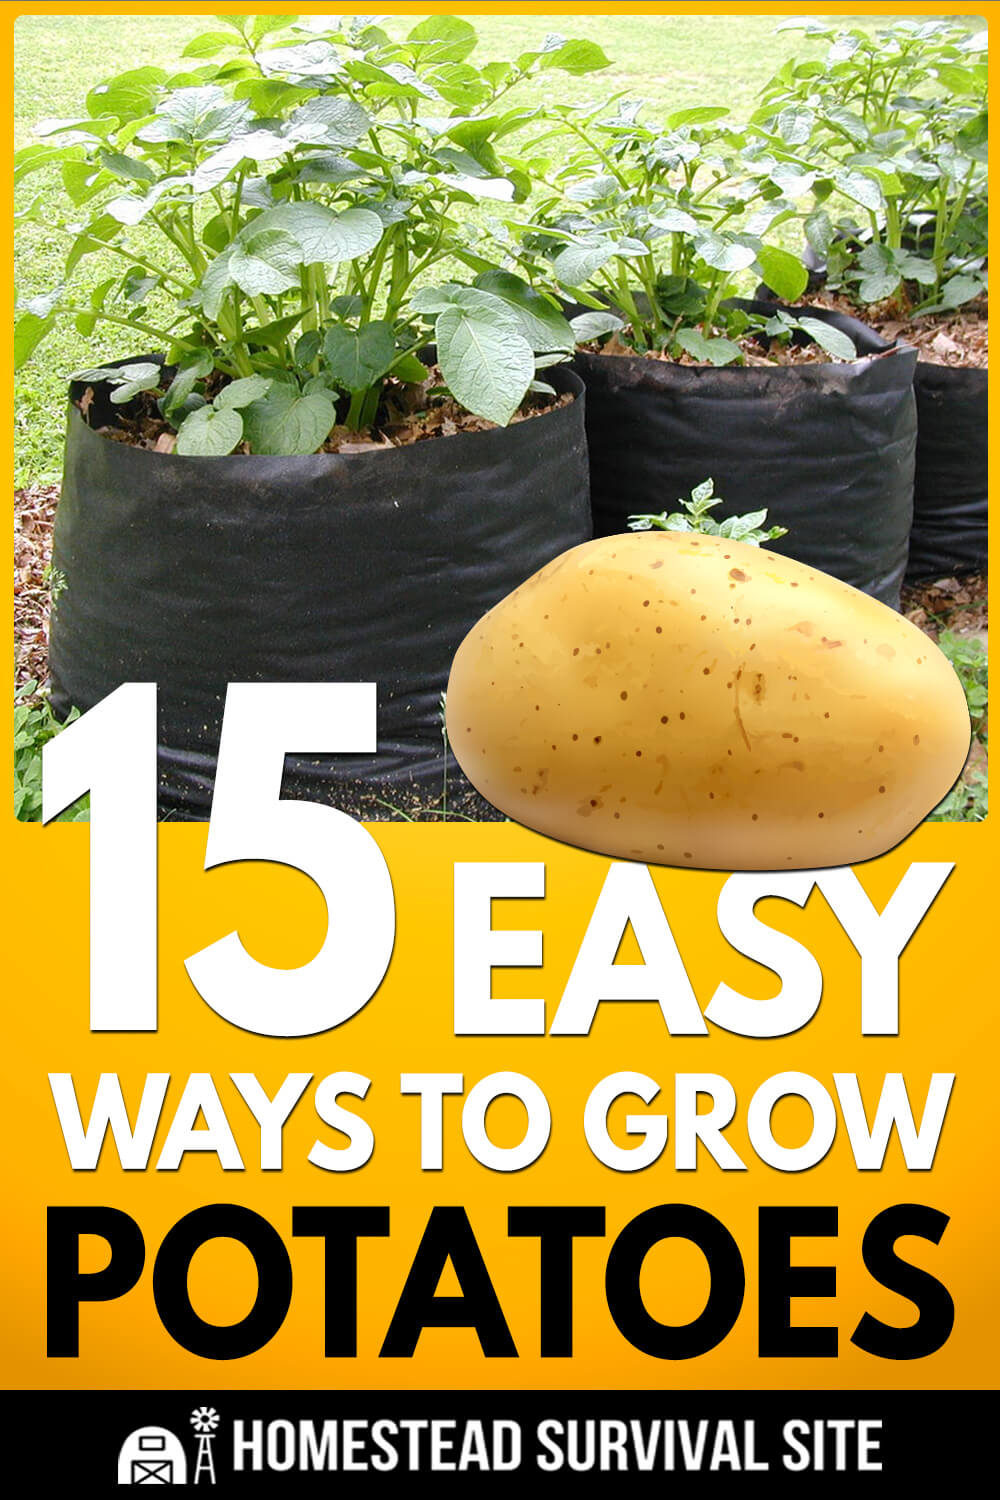 15 Easy Ways to Grow Potatoes